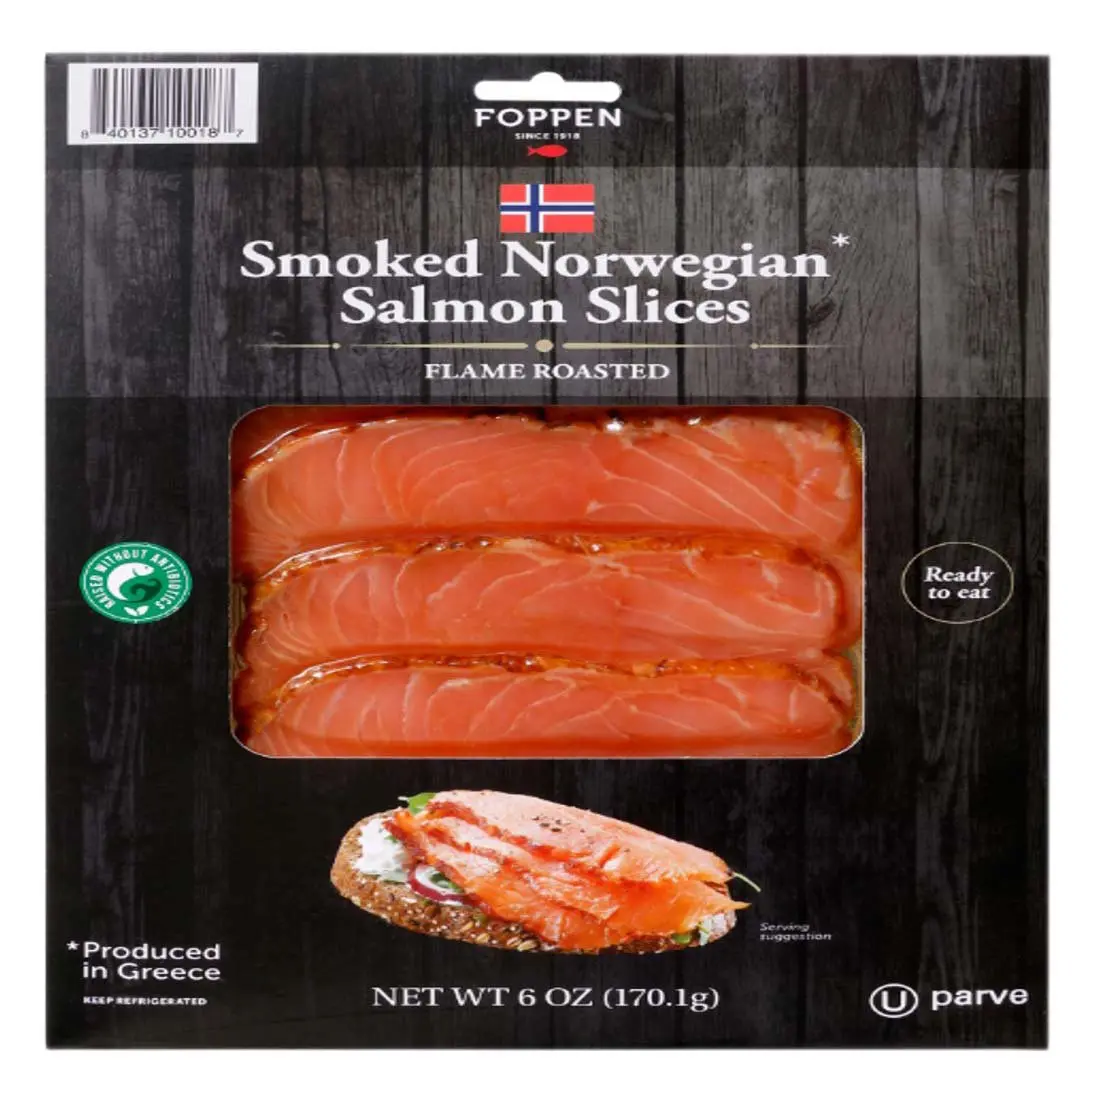 foppen smoked salmon where to buy - Is foppen salmon farmed